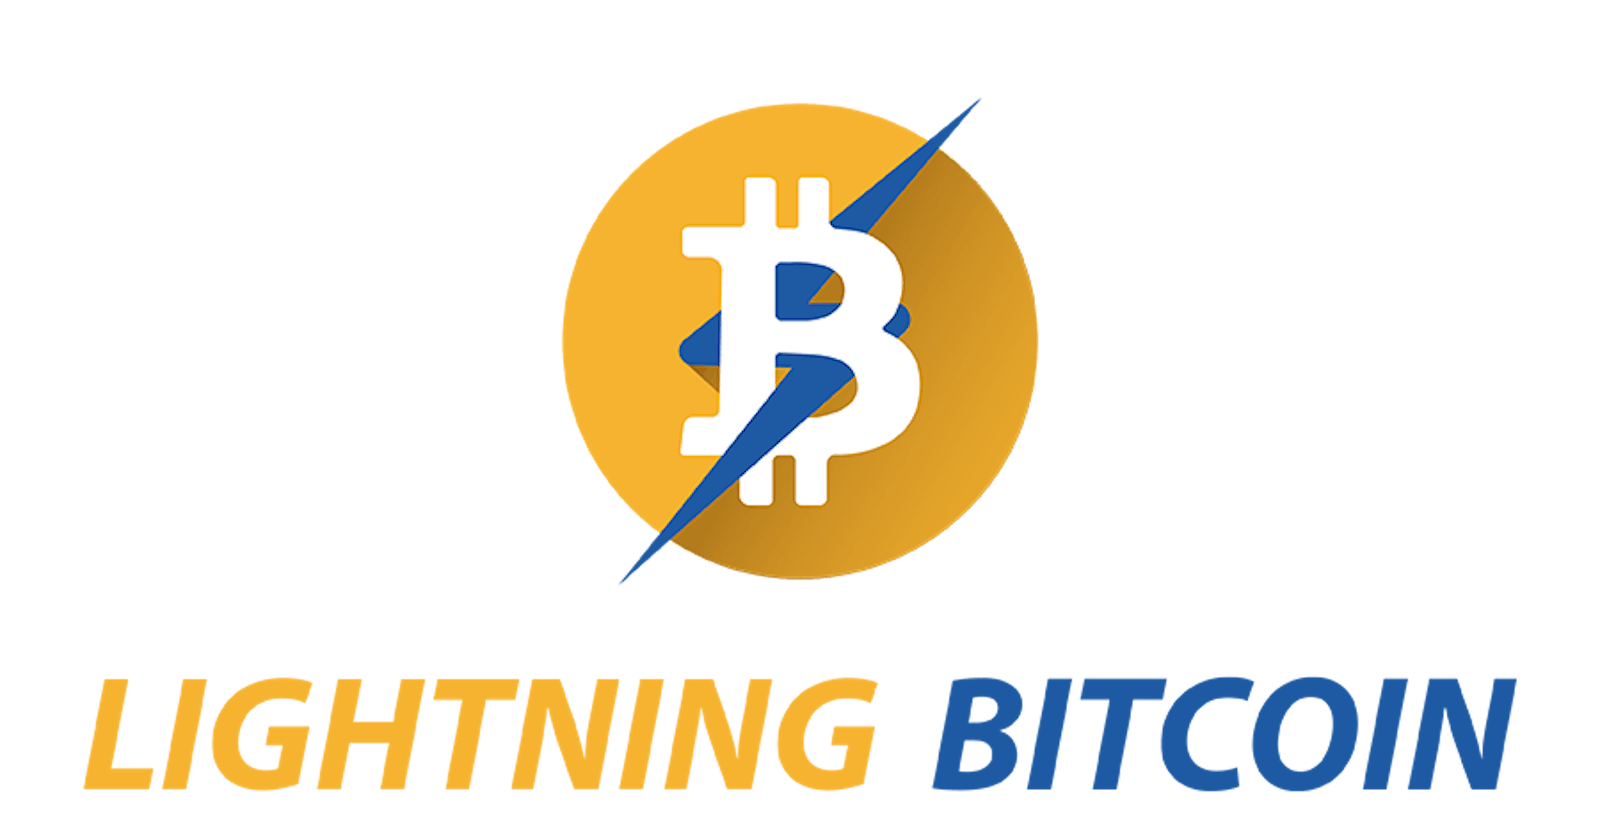 Lightning invoice vs Bitcoin address